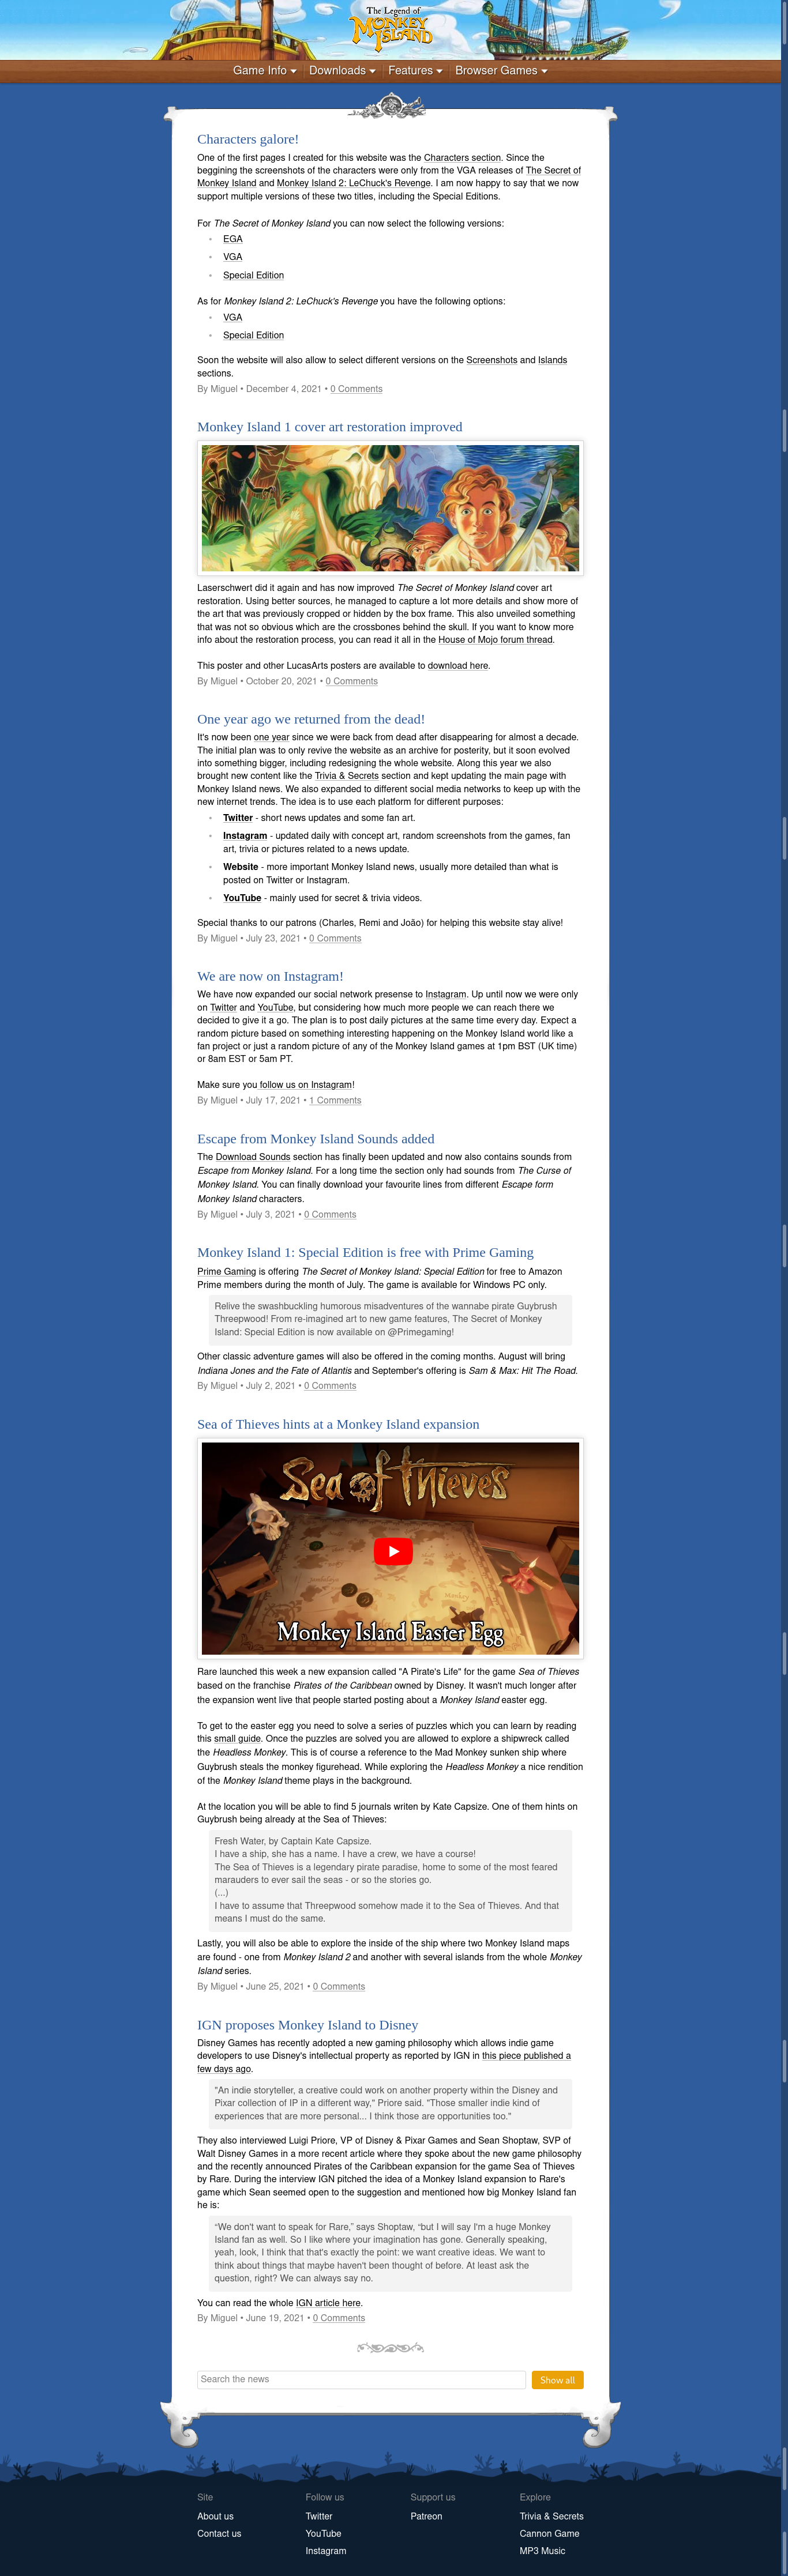 Screenshot of website The Legend of Monkey Island